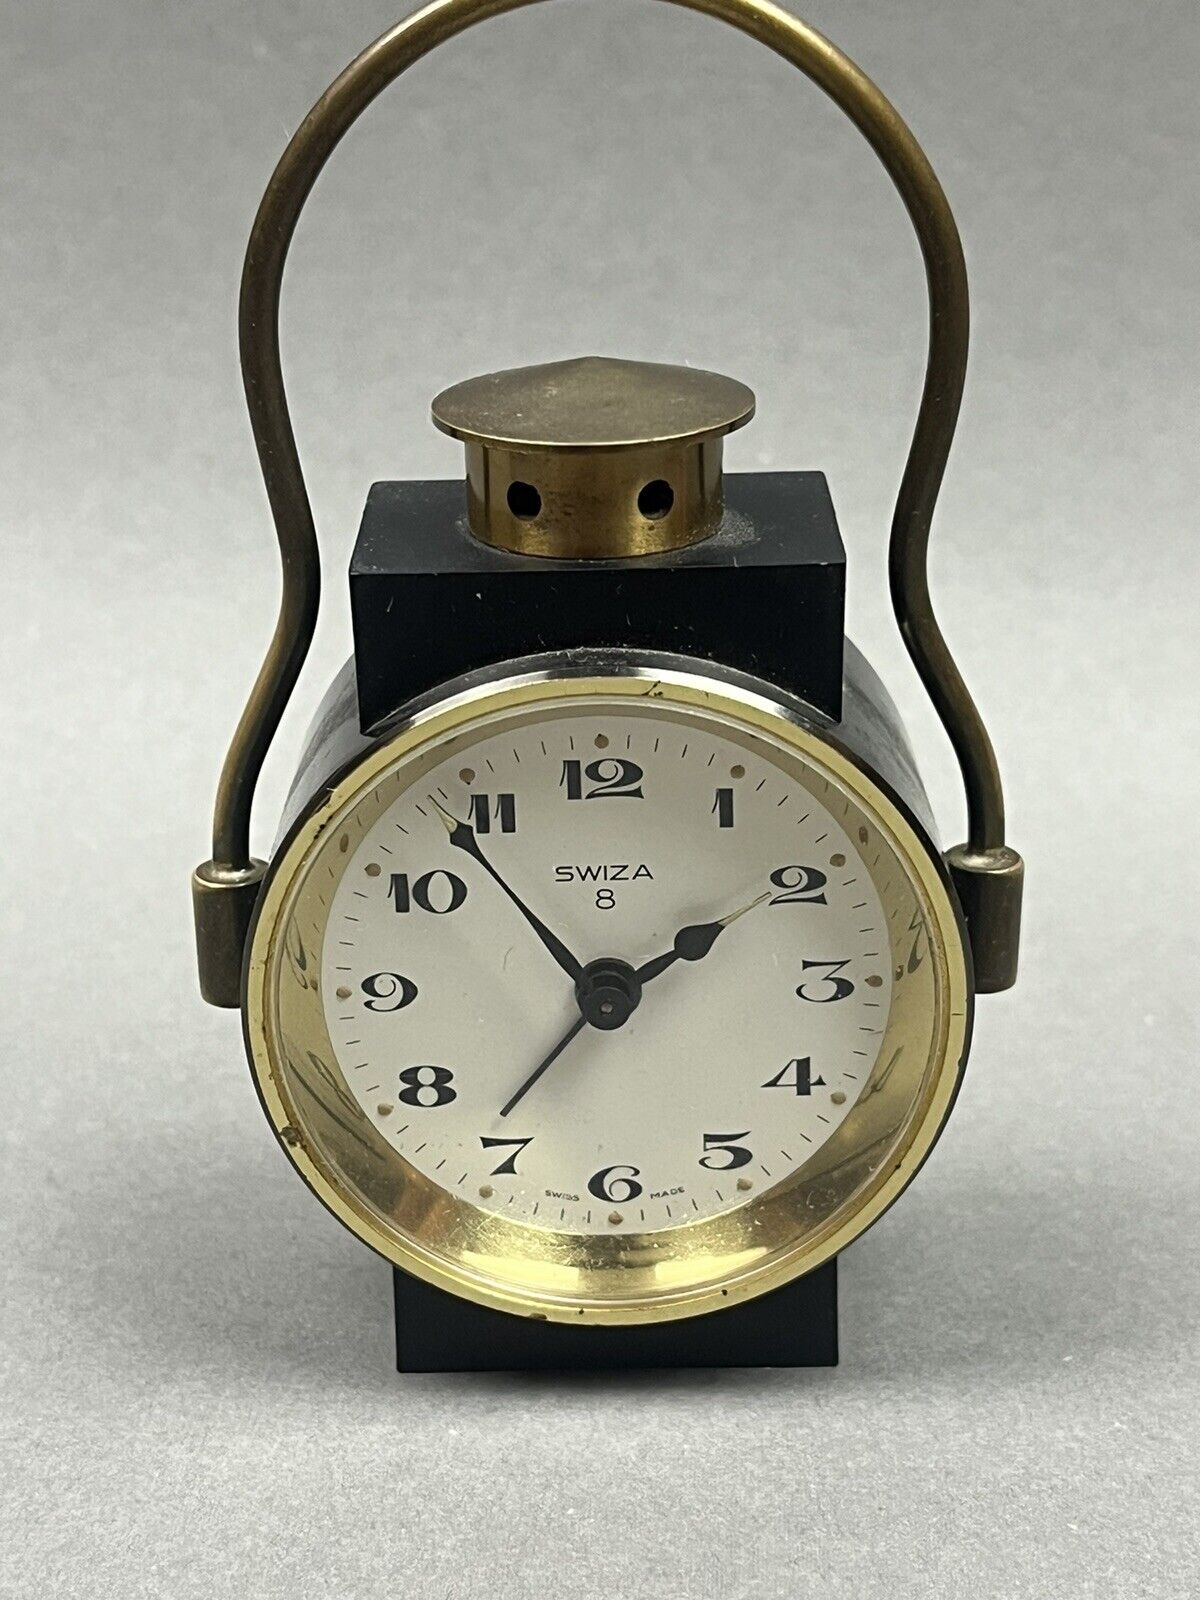 Vintage SWIZA 8 Alarm Clock -  Railroad Train Lantern Style - Wind Up - Working